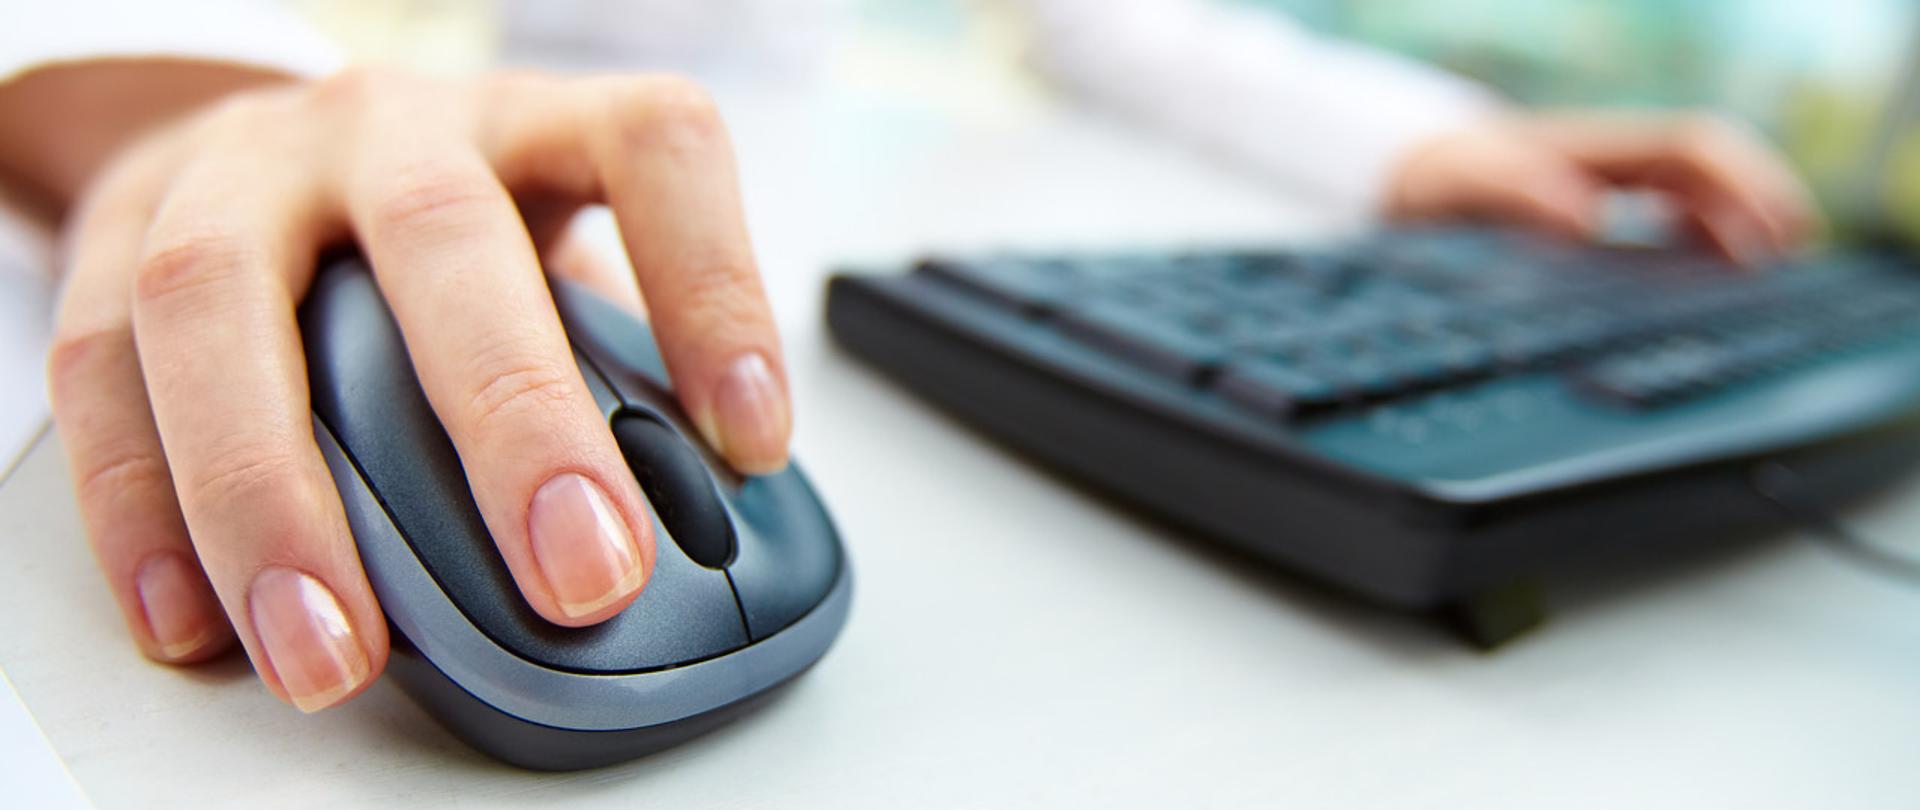 Dłoń na myszce komputerowej i klawiatura komputera.